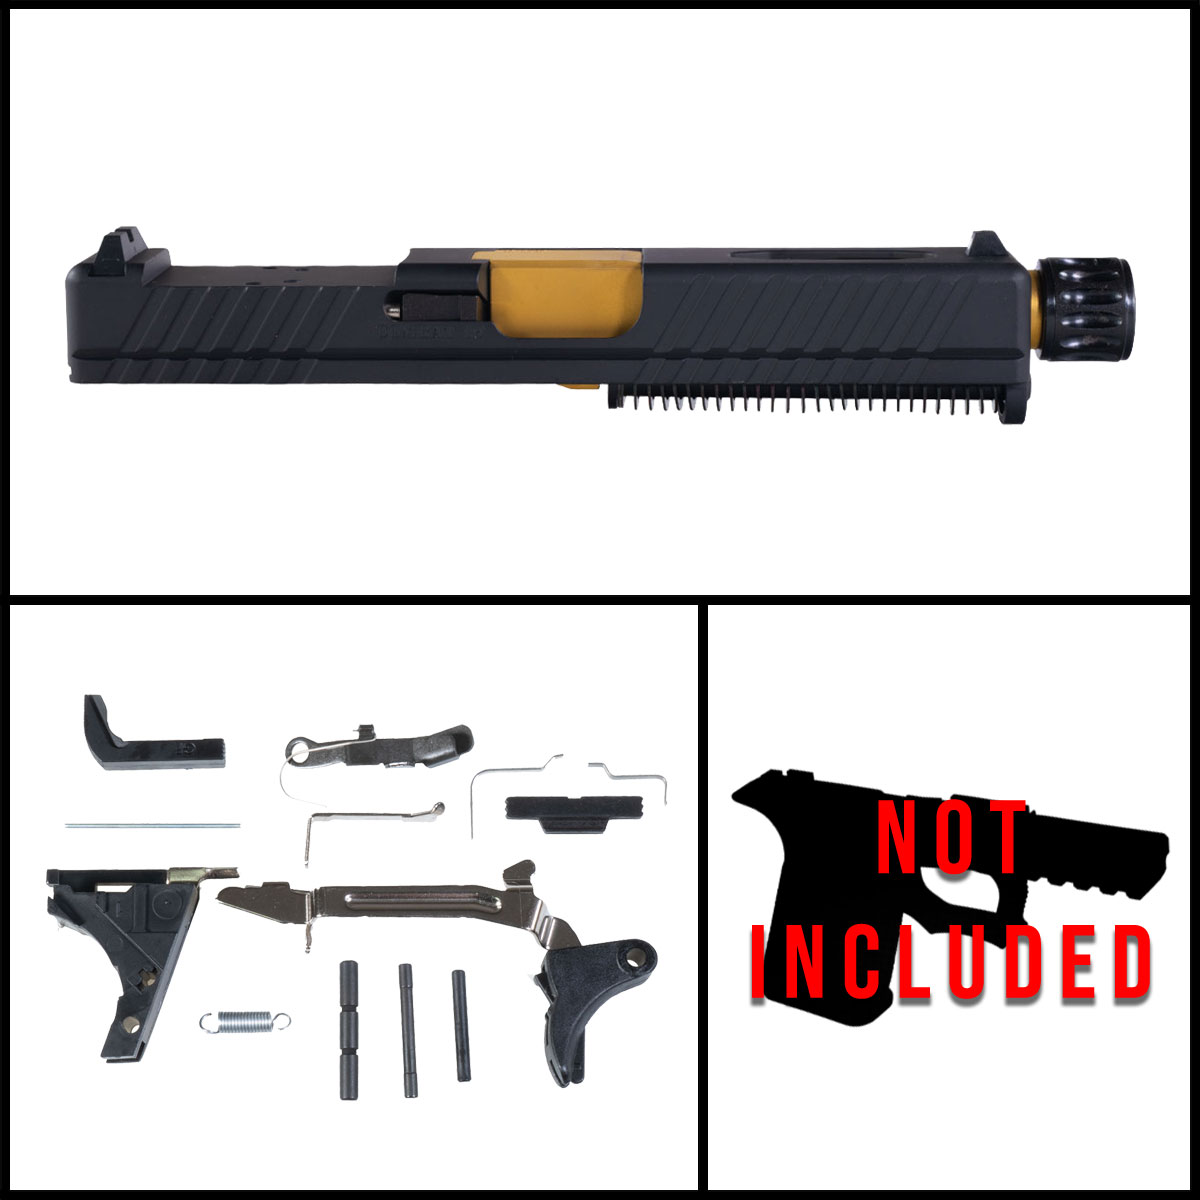 MMC 'Essor' 9mm Full Pistol Build Kit (Everything Minus Frame) - Glock 19 Gen 1-3 Compatible